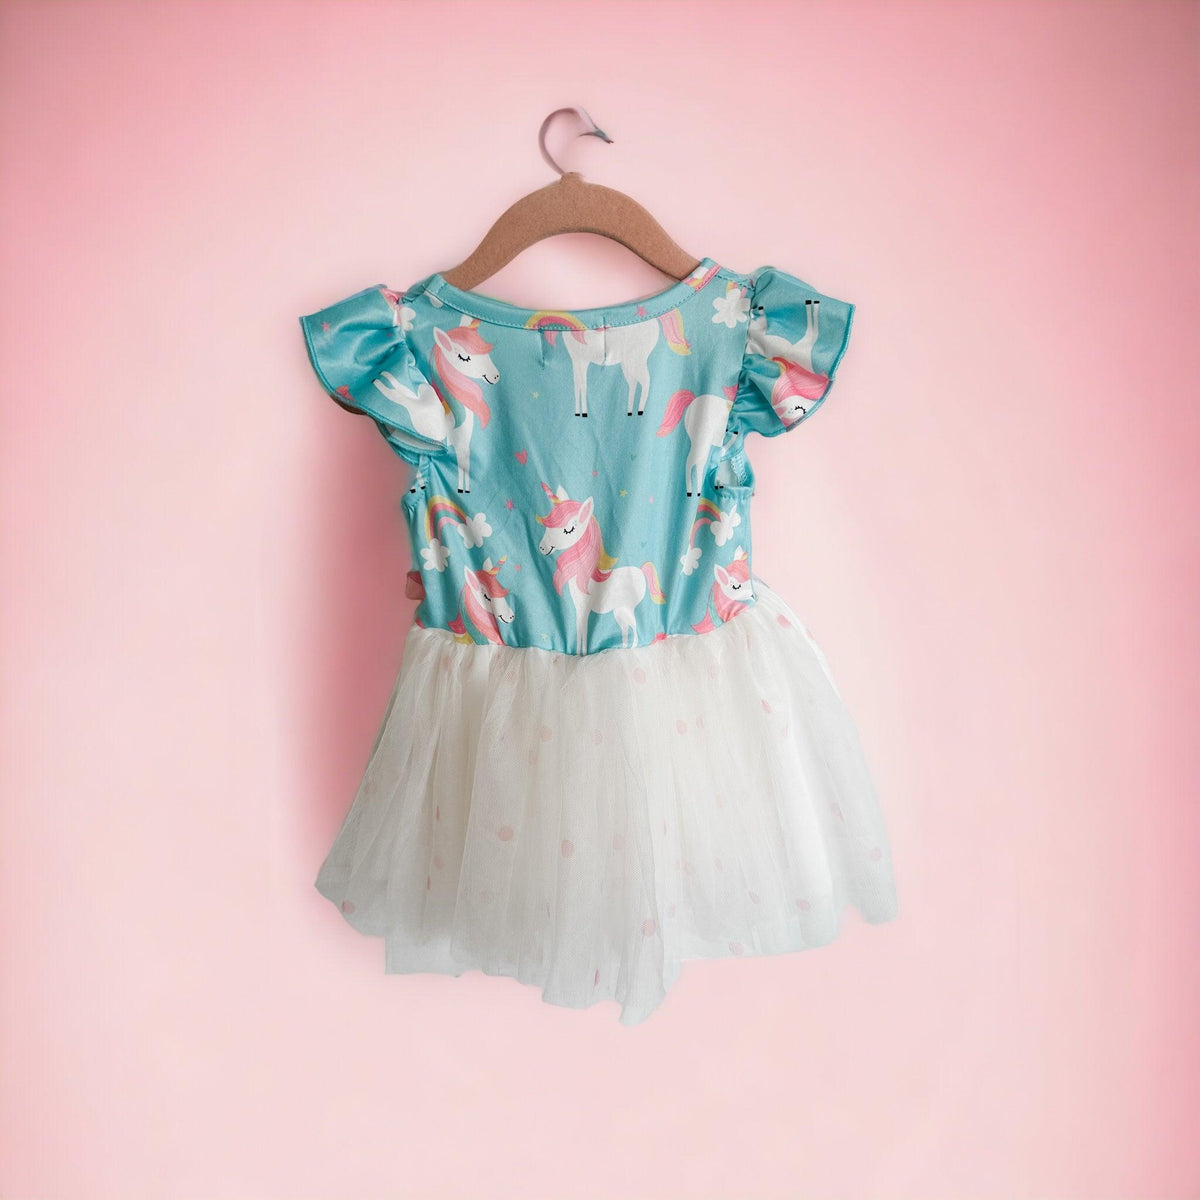 Pete+Lucy | Girl's Unicorn Love Dress | Blue and Pink Dress - becauseofadi